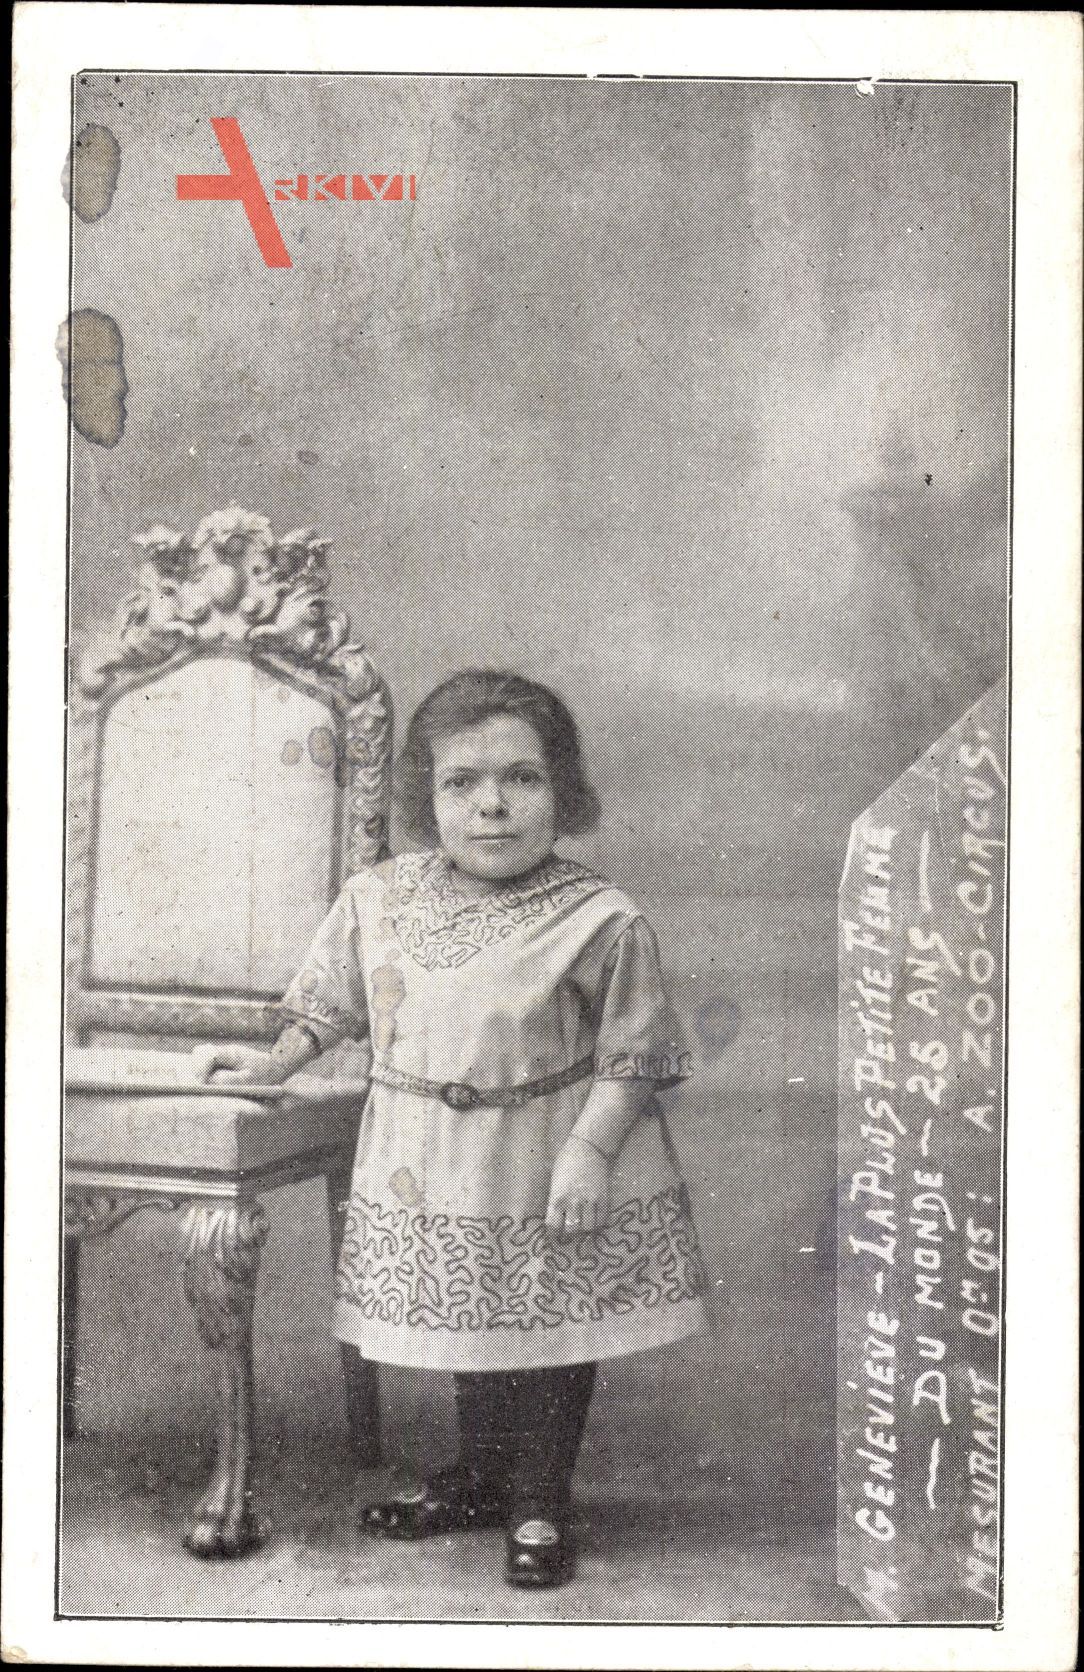 Genevieve, La plus petite Femme du Monde, 25 ans, Liliputanerin